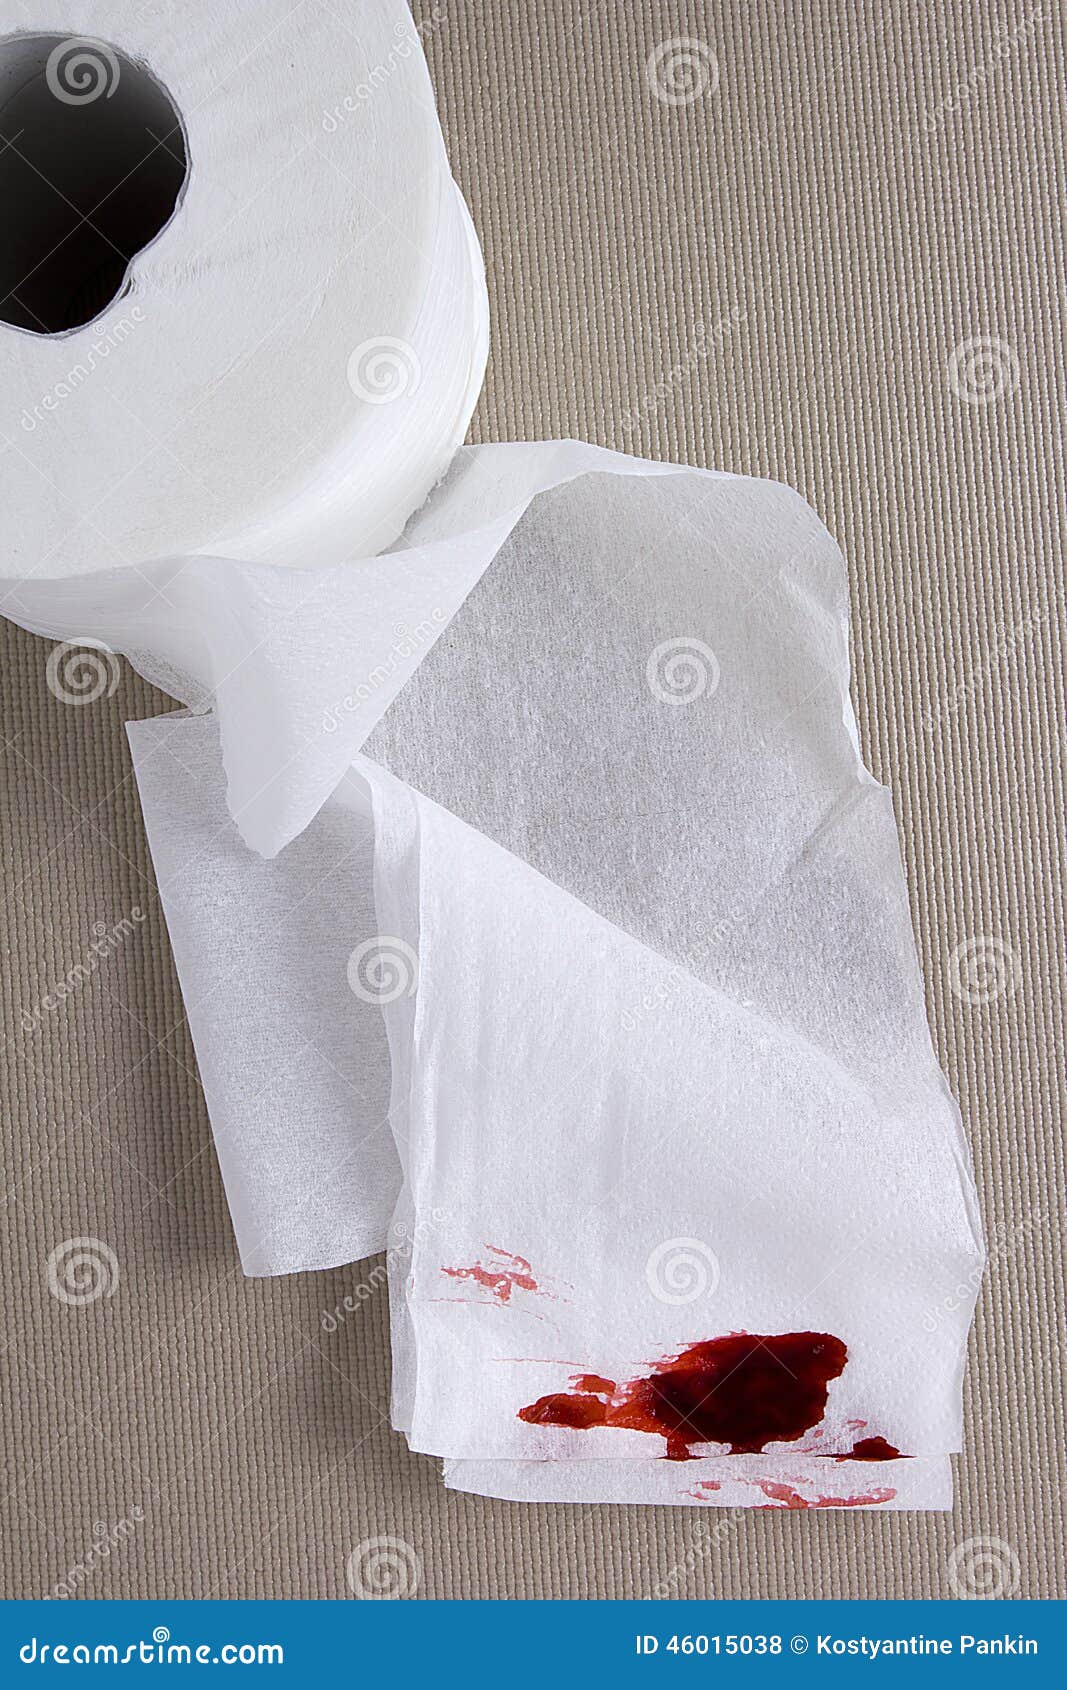 Blut auf toilettenpapier